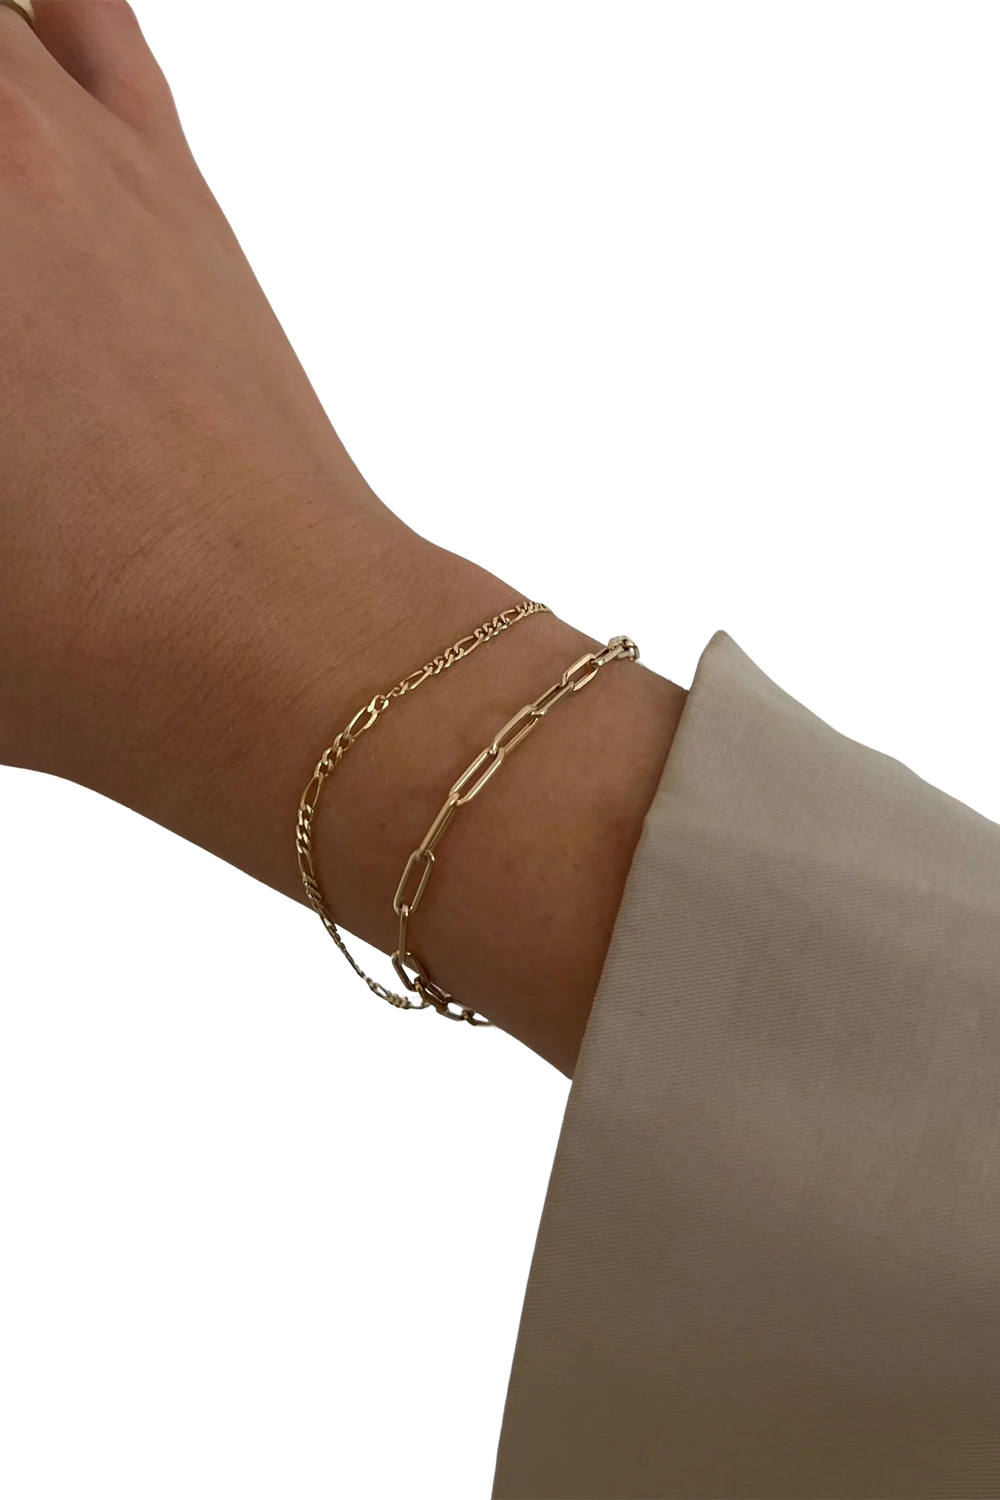 Paperclip Link Chain Bracelet